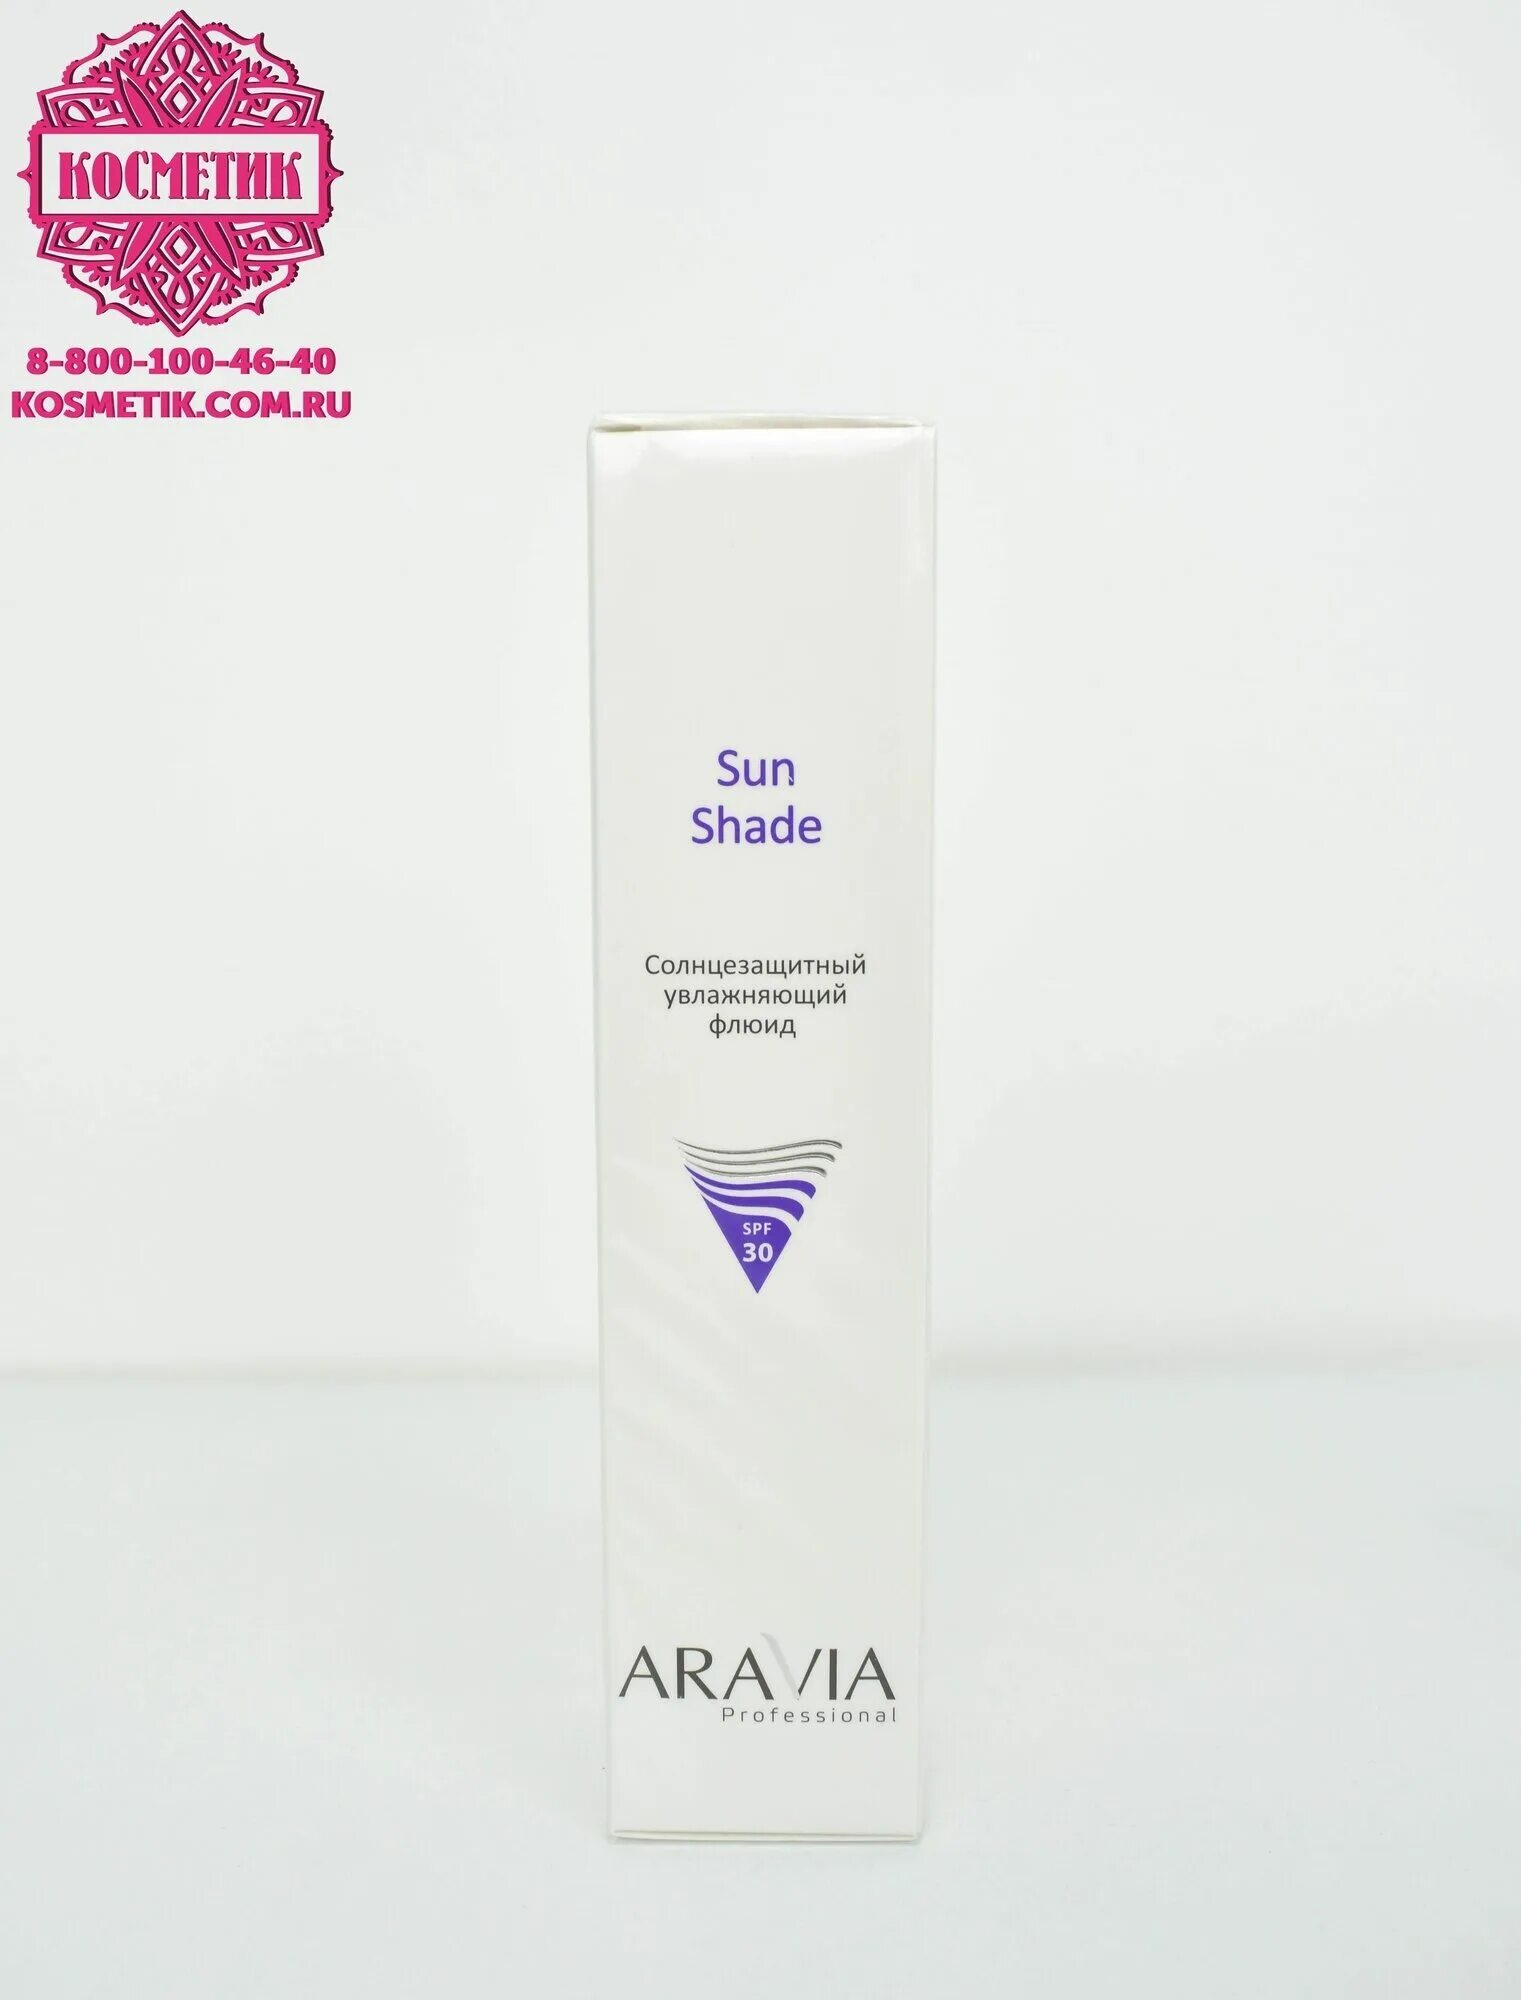 Hydrating sunscreen aravia spf 50. Aravia SPF 50. Аравия солнцезащитный флюид. Aravia professional Sun Shade. Крем Аравия с СПФ 50.